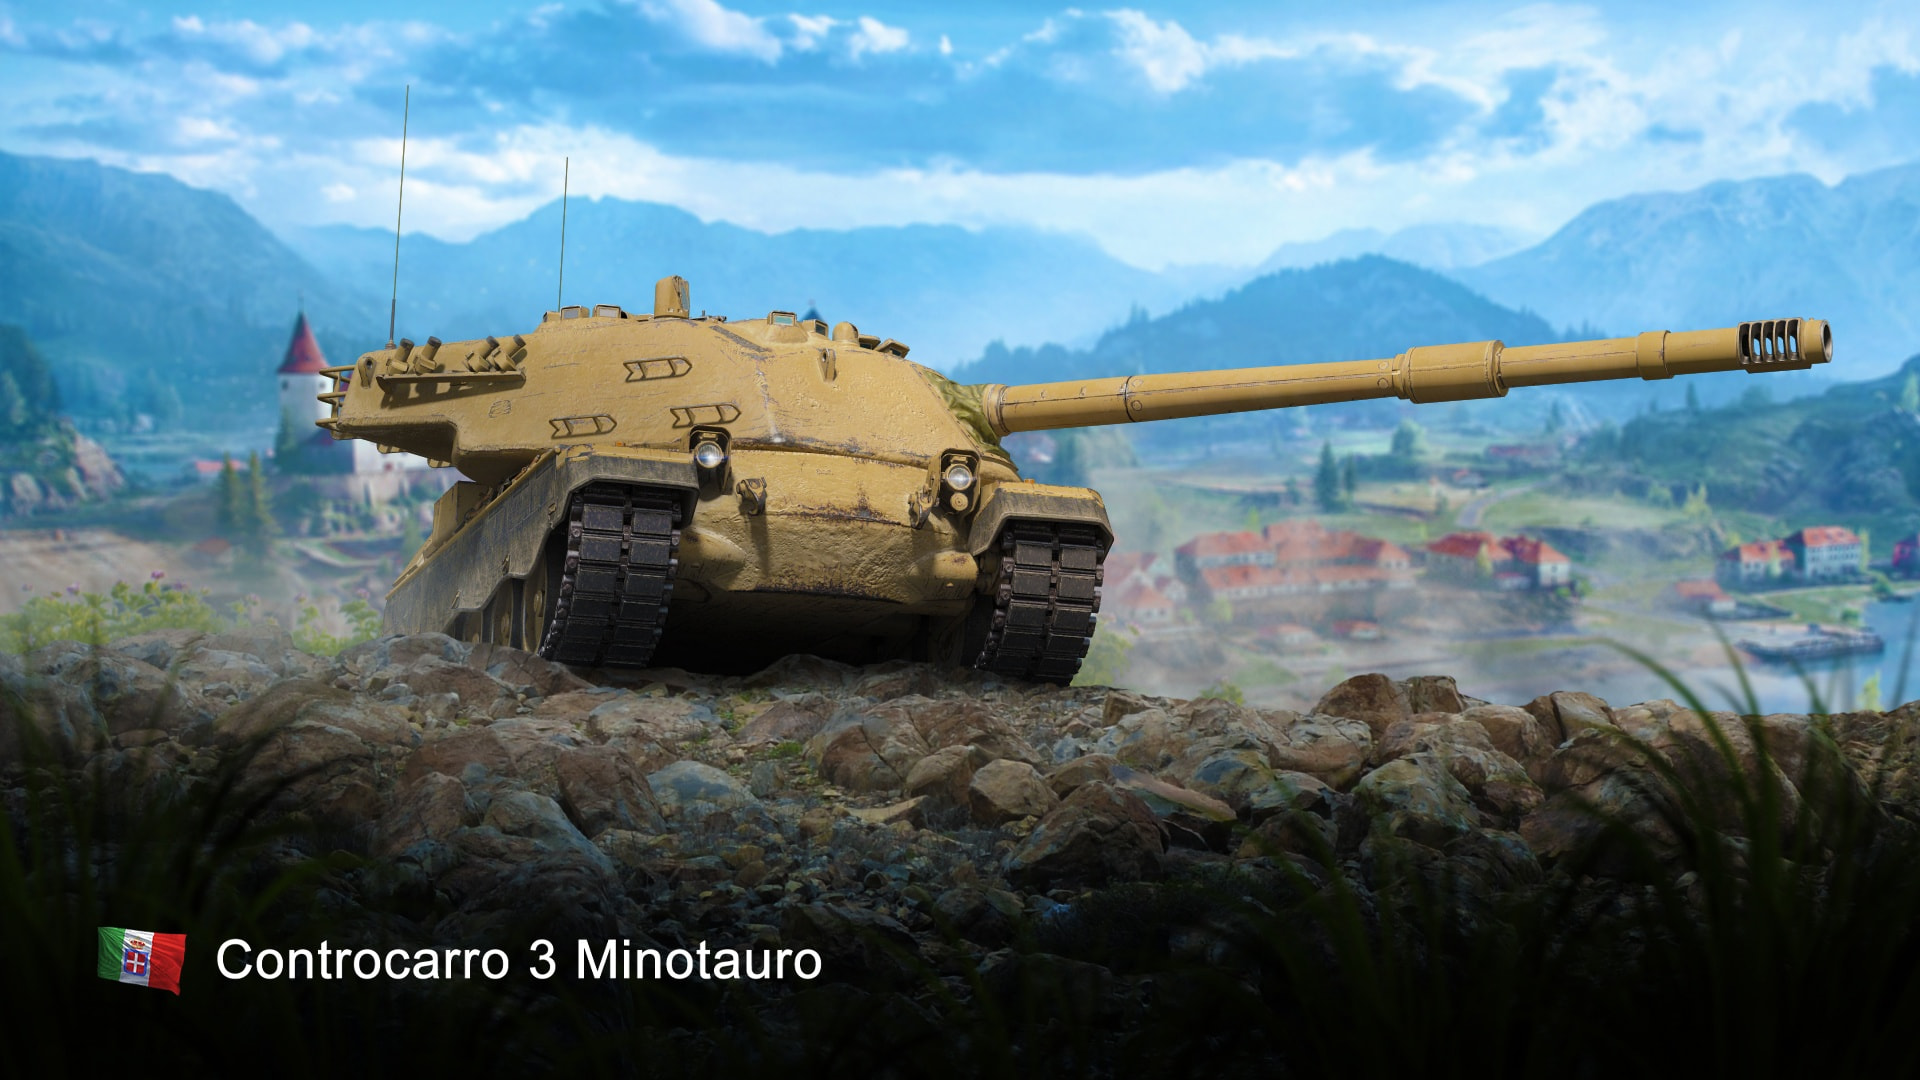 Tankist Controgarro 3 Minotauro Команда вытянула!)))